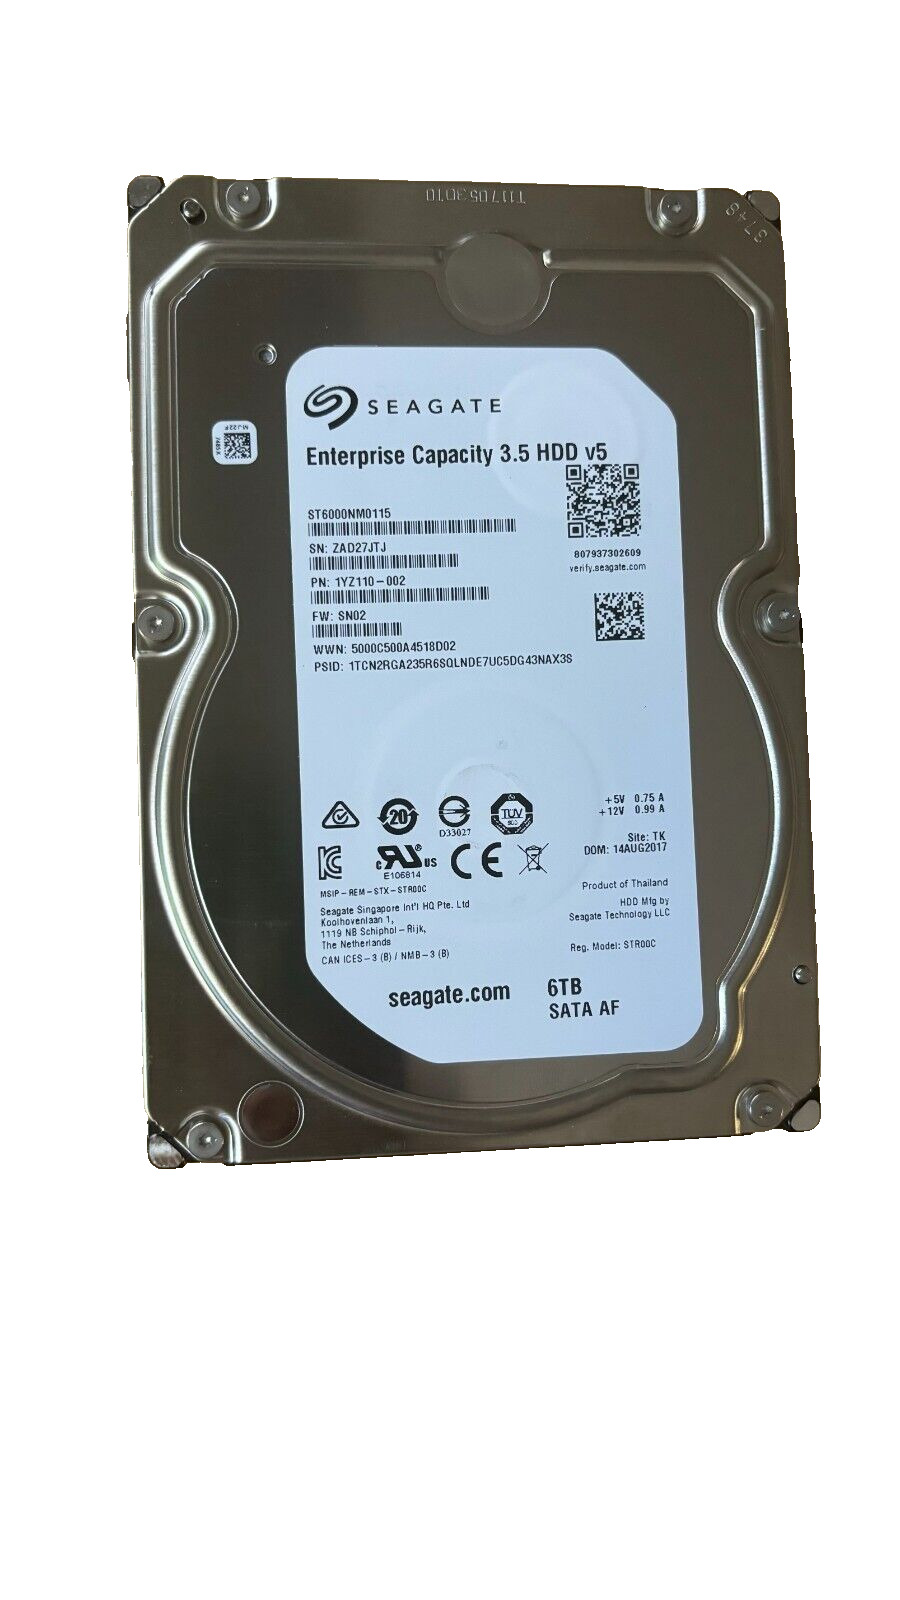 Seagate 3.5” Hard drive 6TB STR00C SATA AF ST6000NM0115